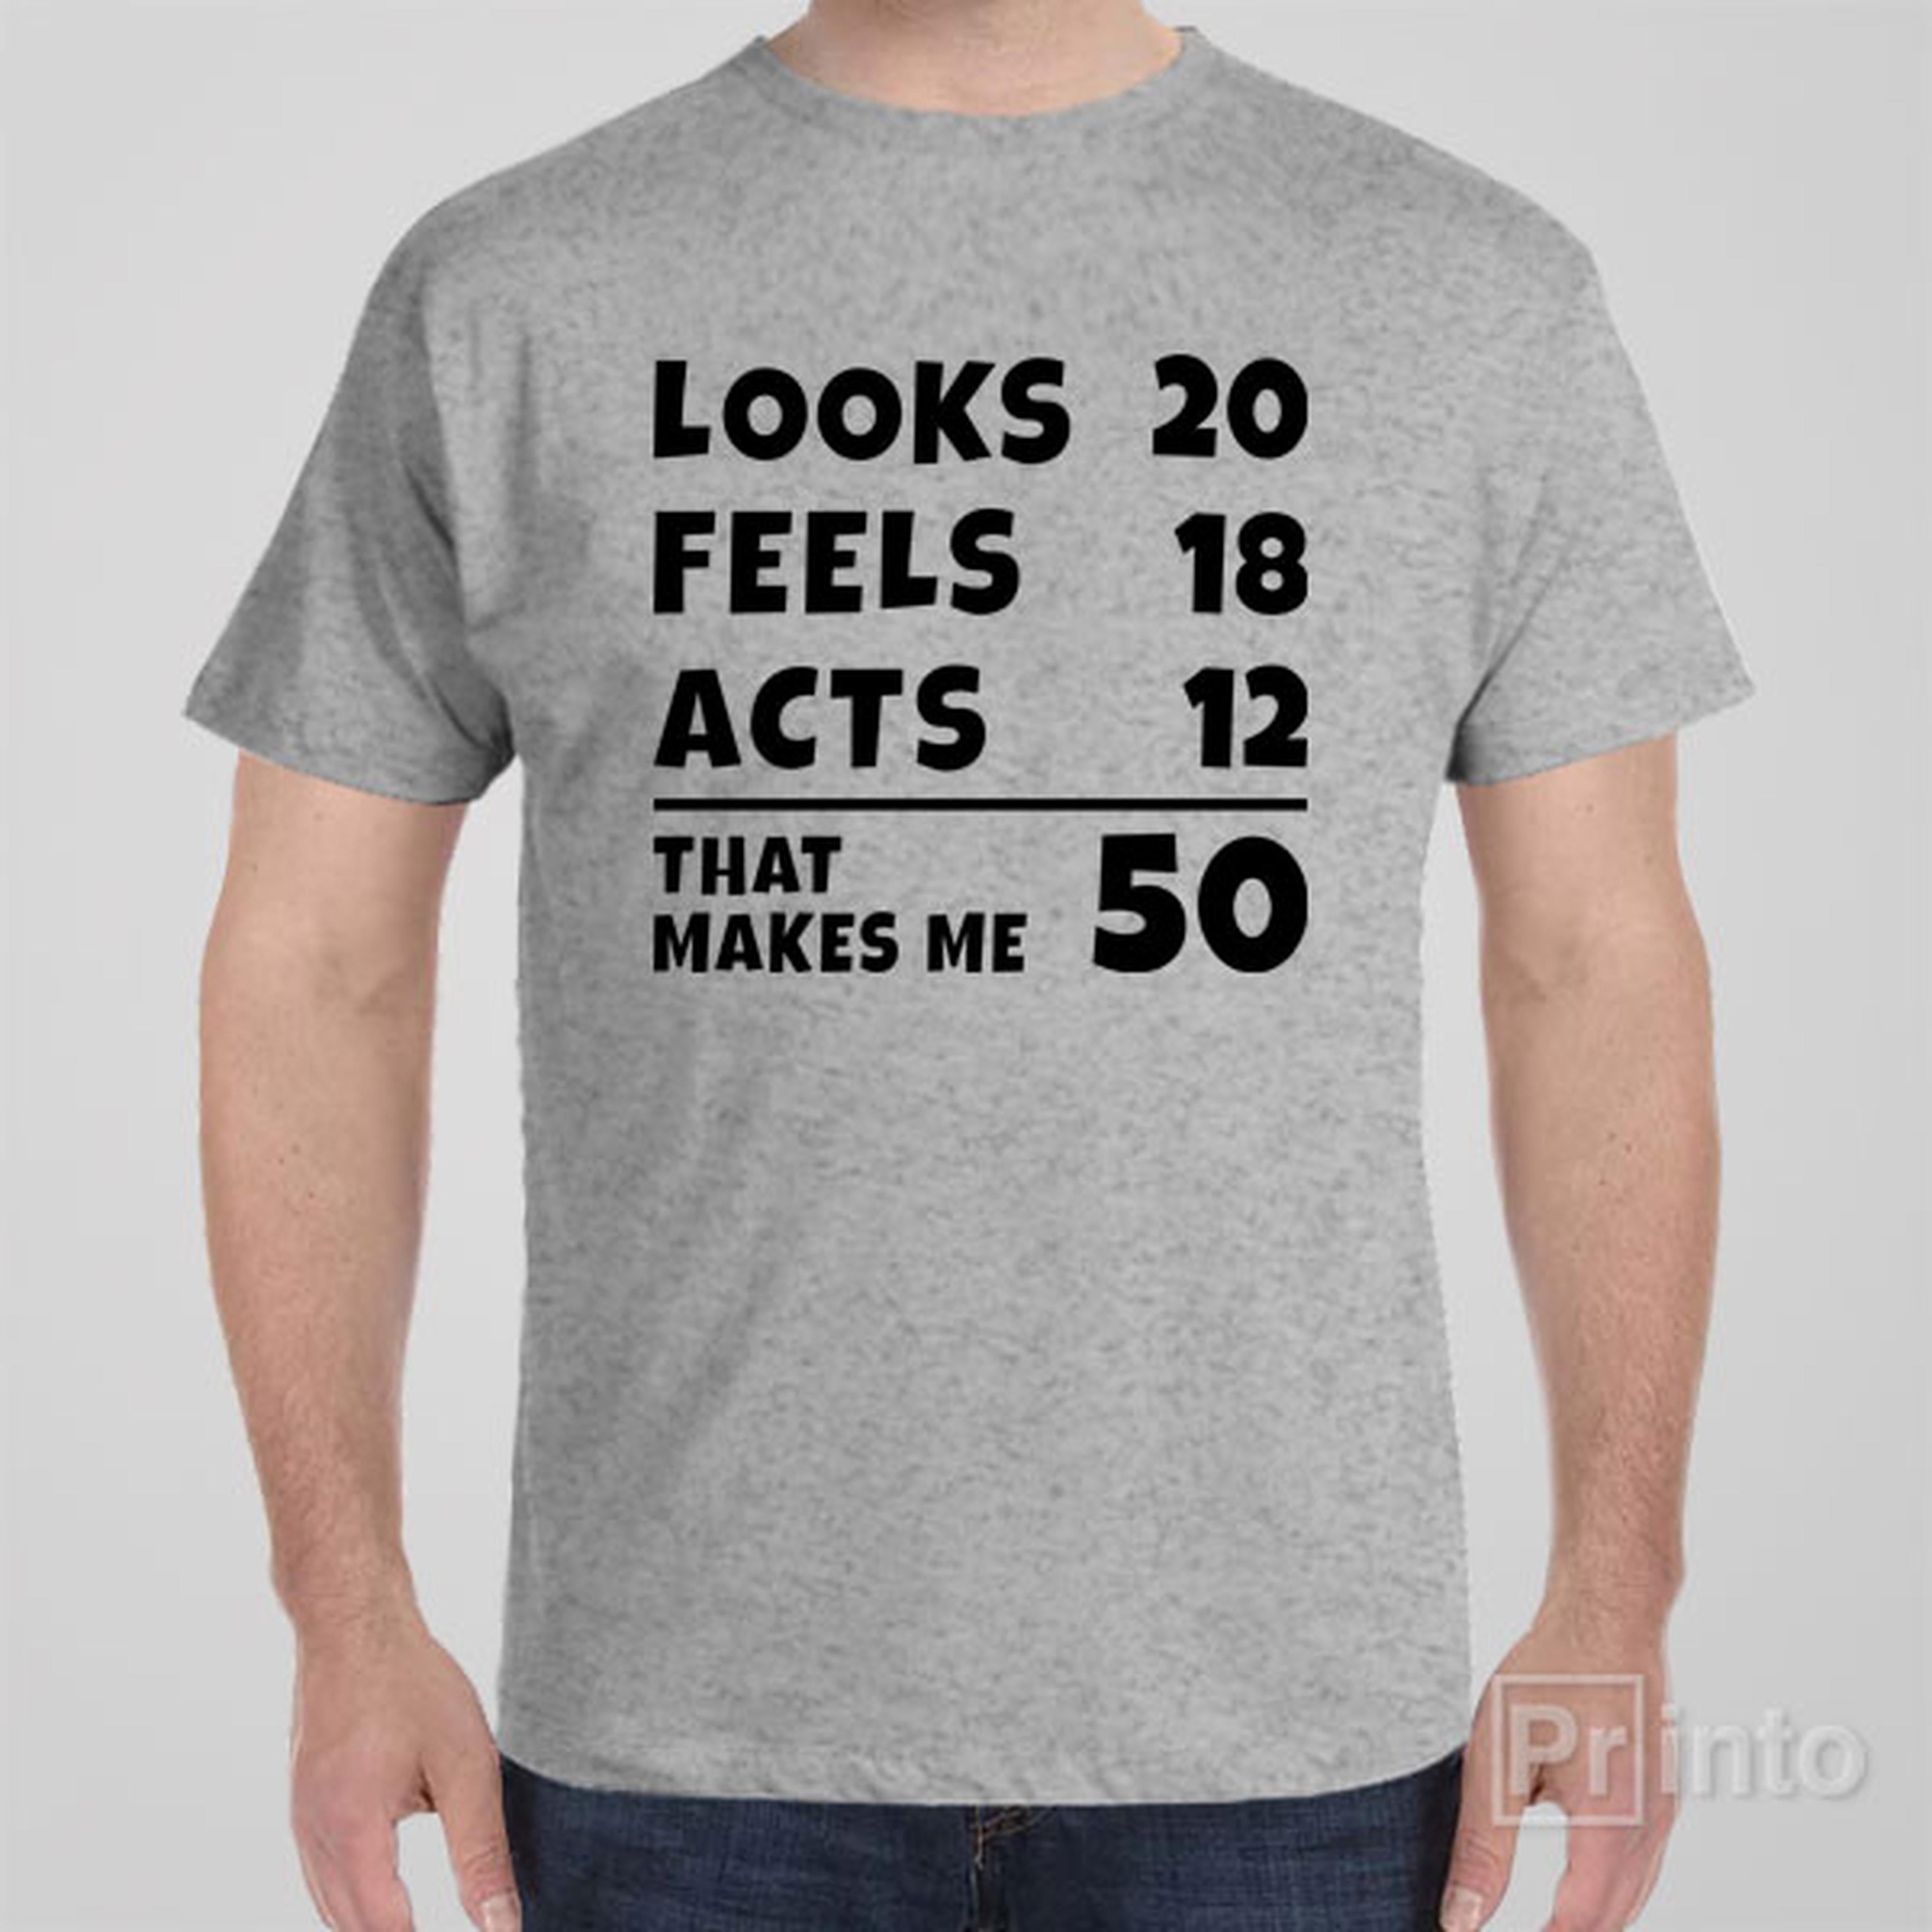 that-makes-me-50-t-shirt